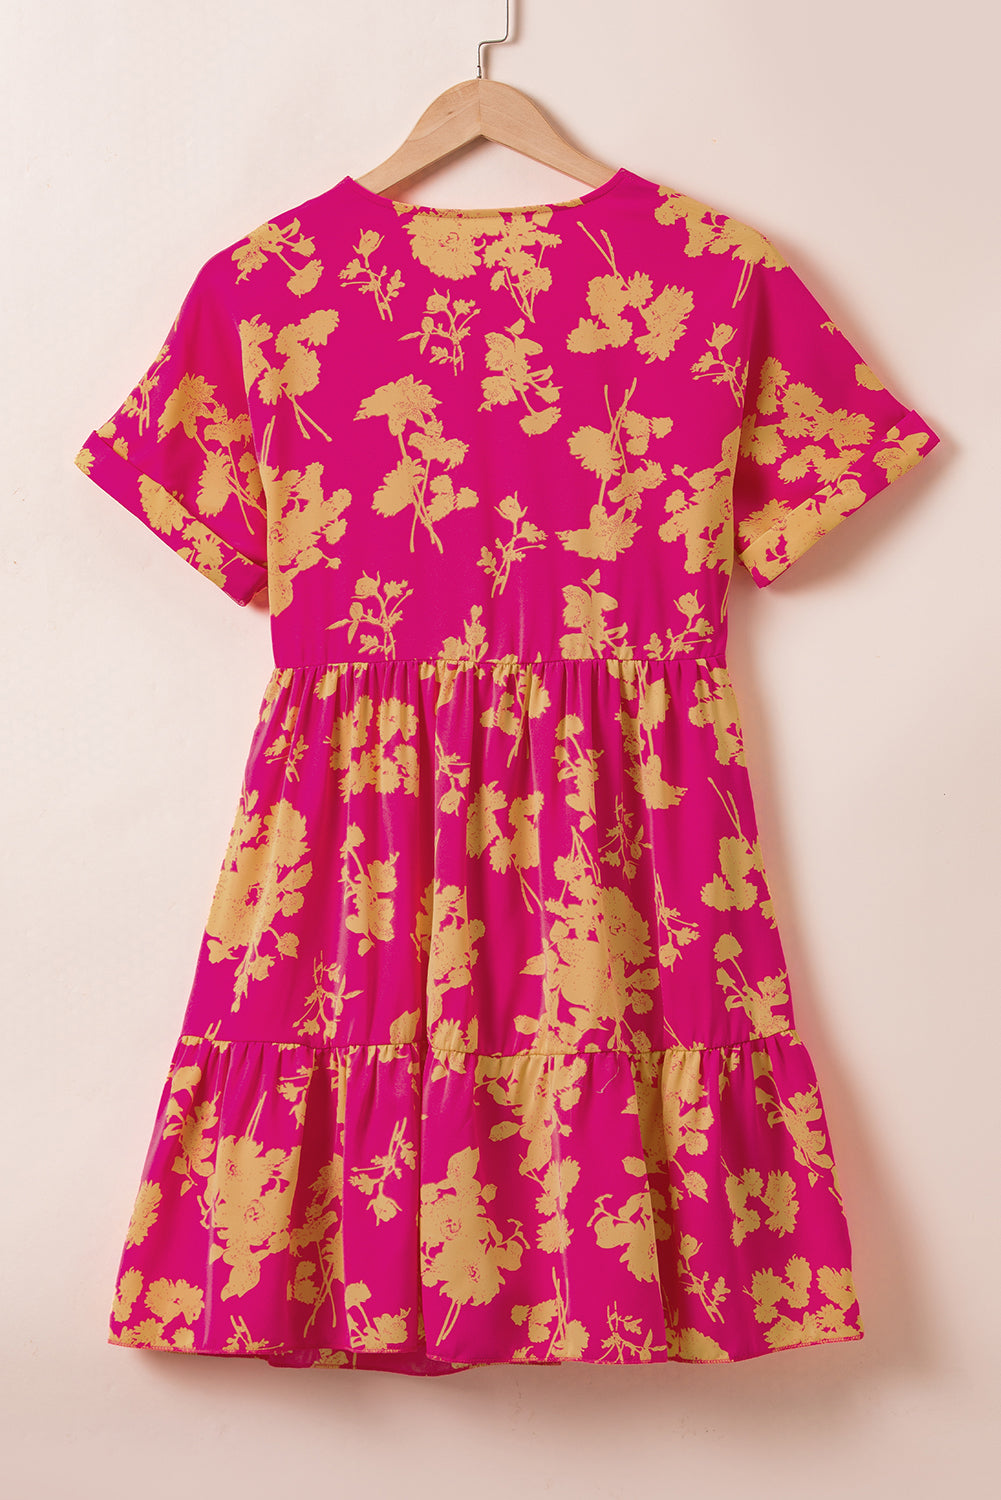 Rose Colored Floral Mini Sundress| Cute Boho Summer Dress